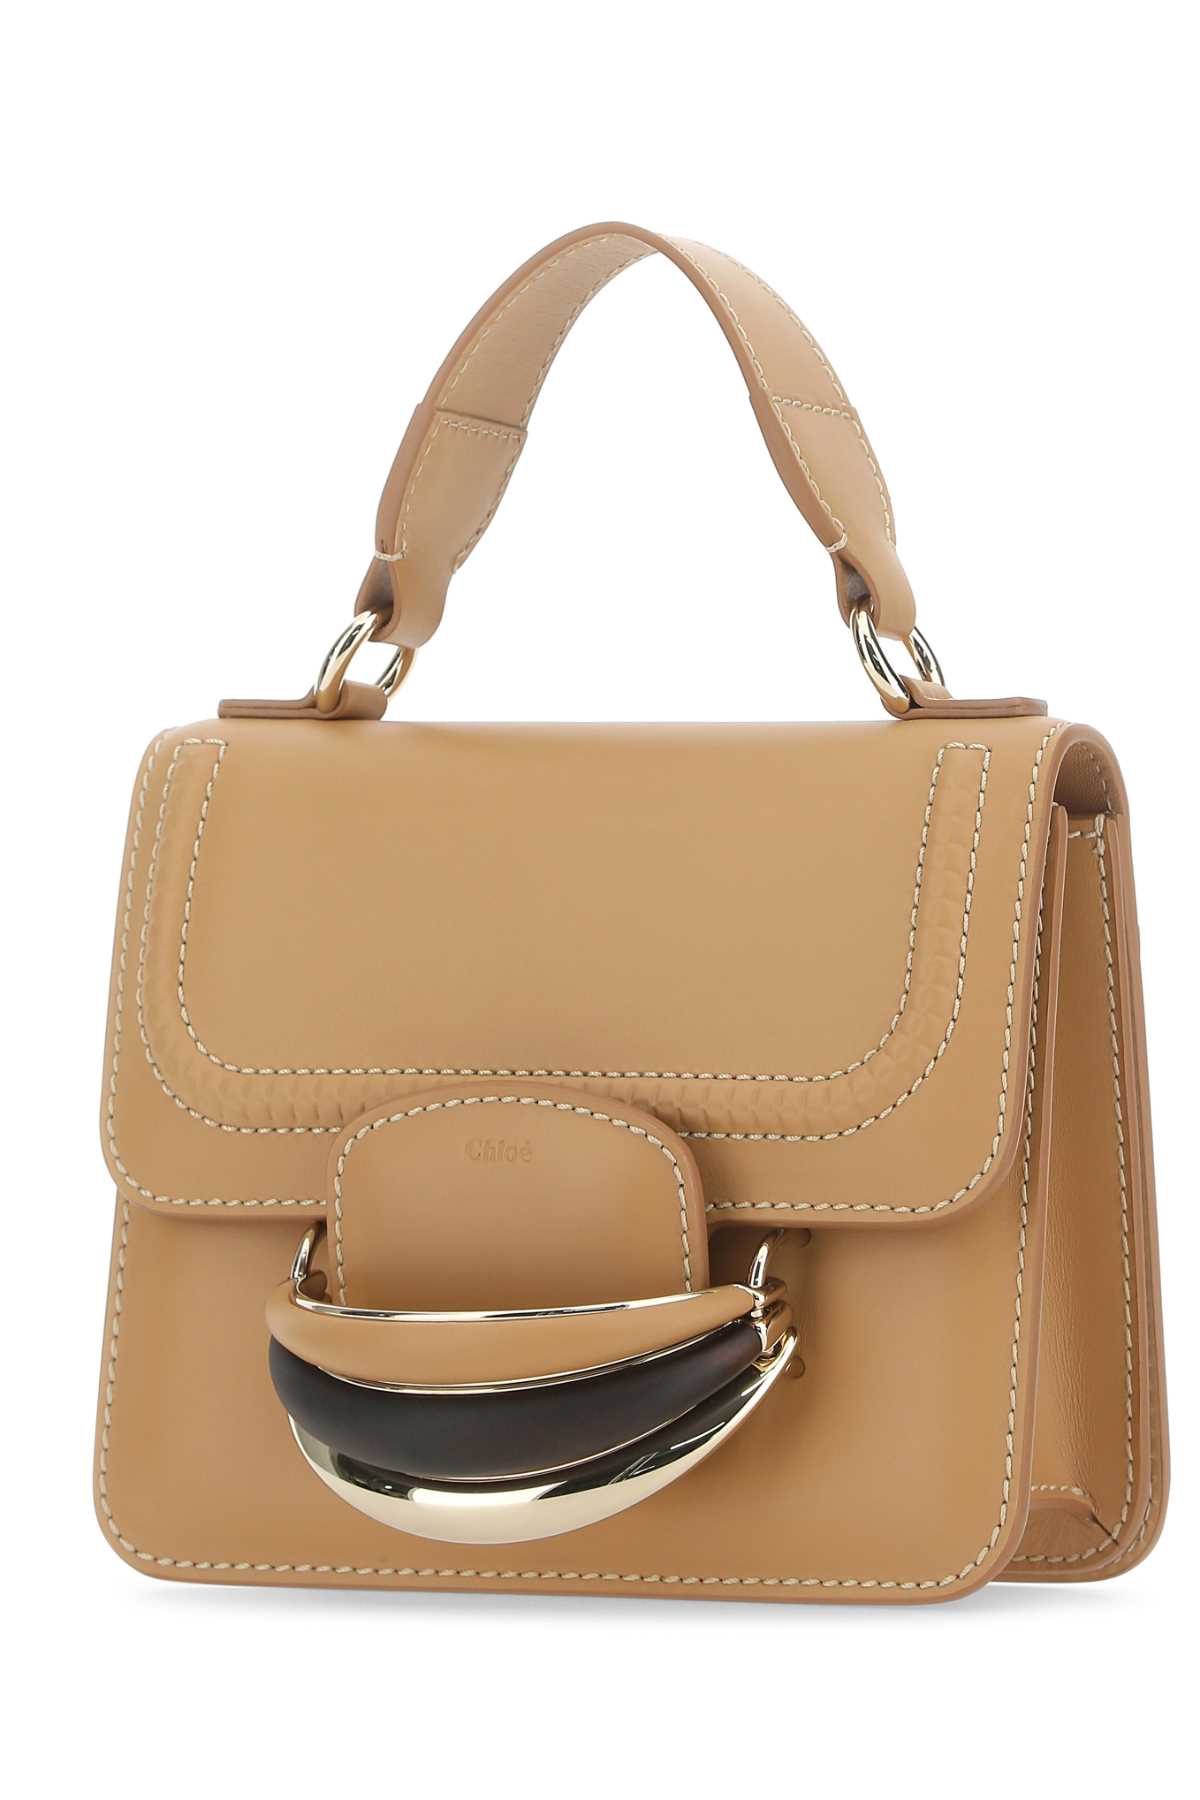 Chloé Camel Leather Small Kattie Handbag In 26x